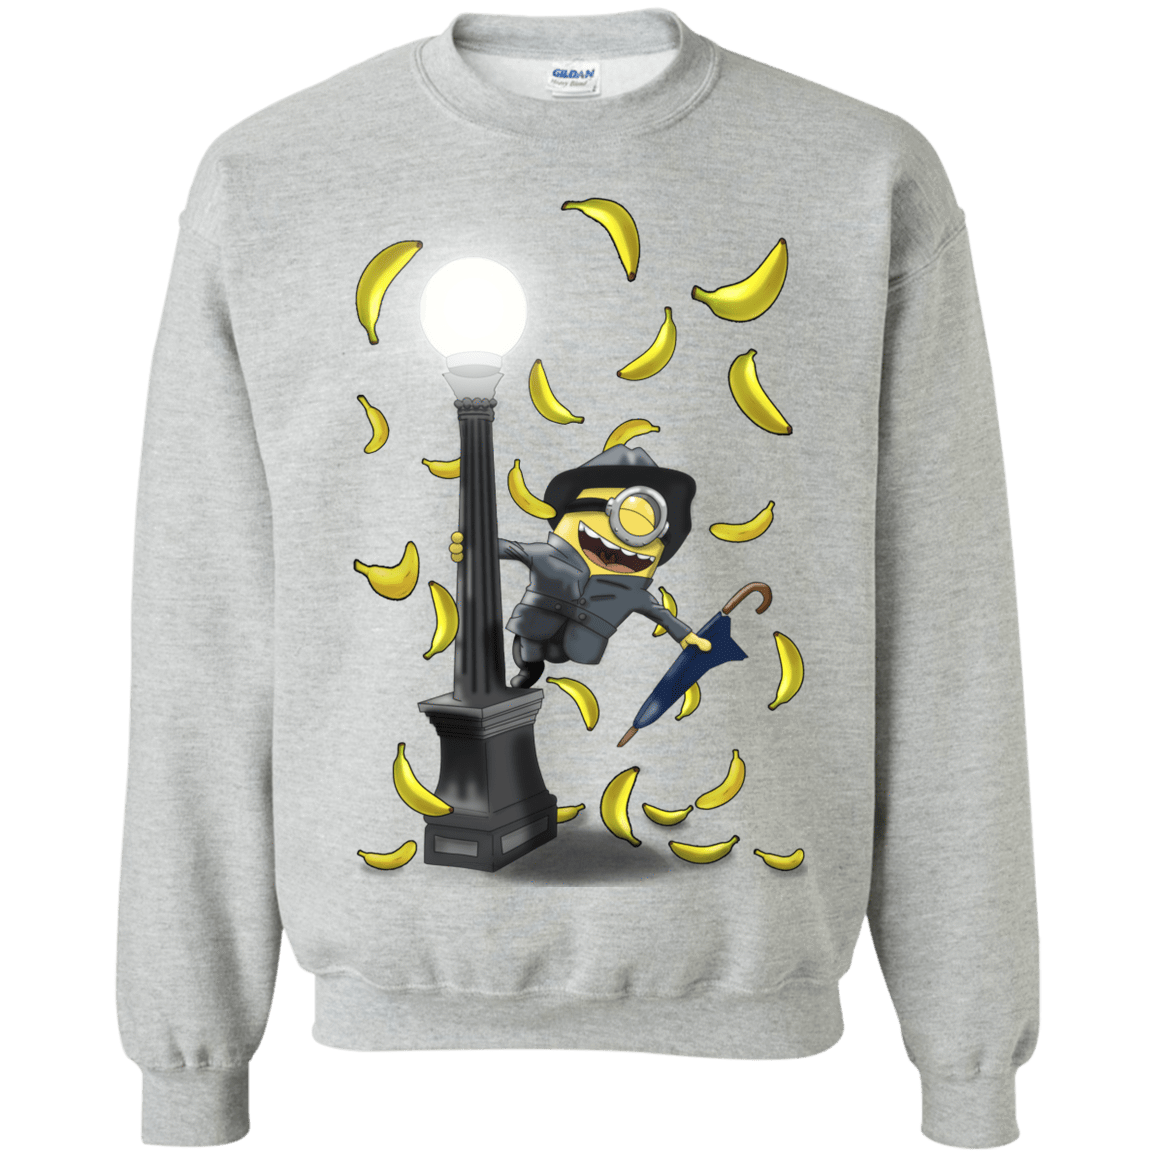 Sweatshirts Sport Grey / S Banana Rain Crewneck Sweatshirt